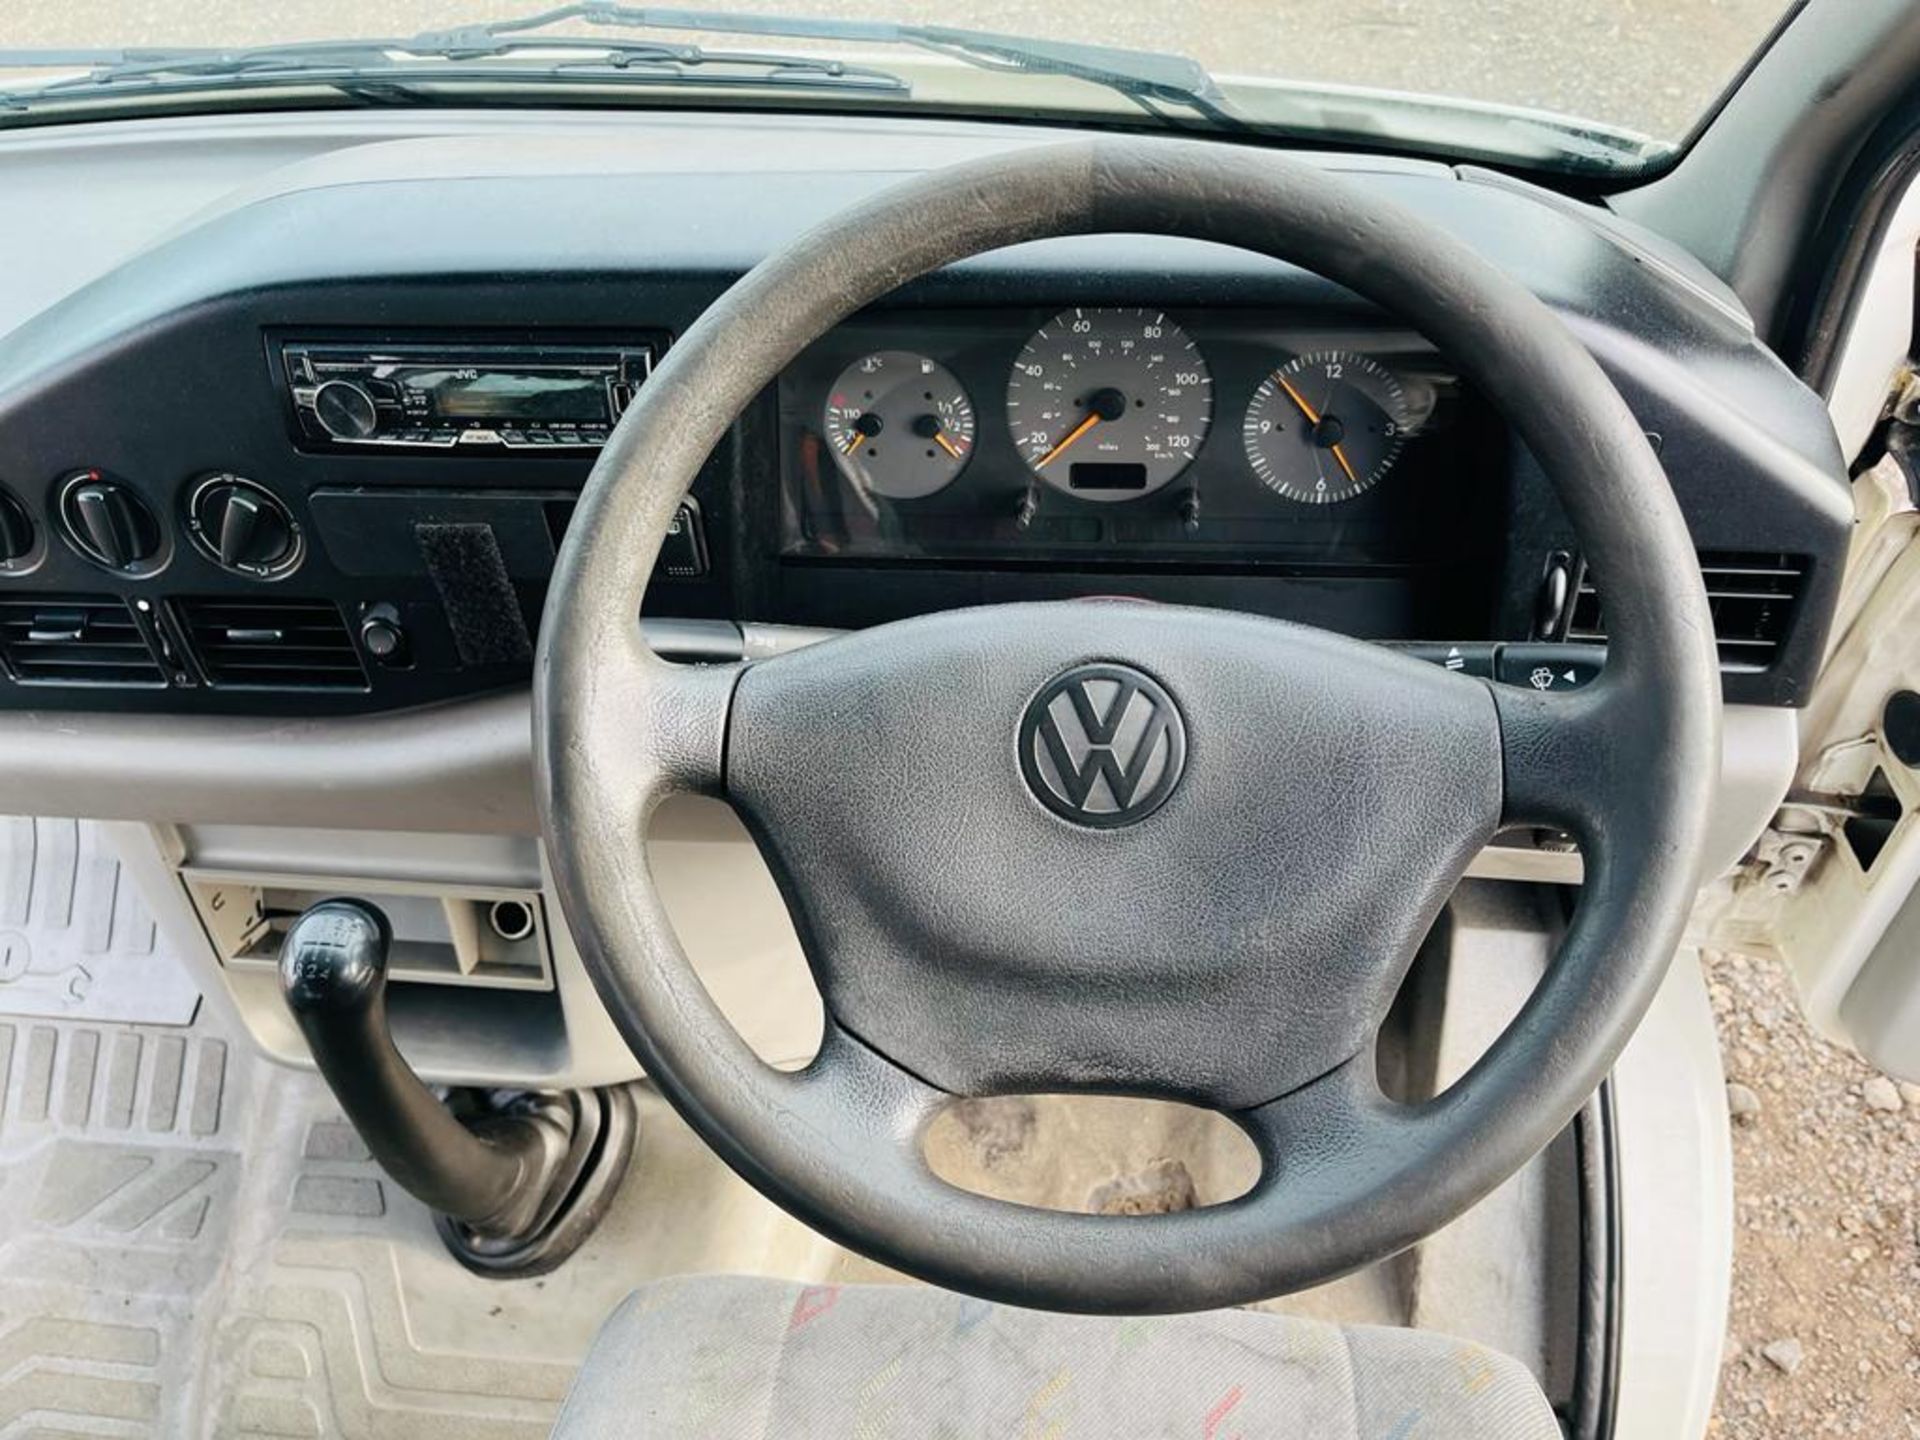 Volkswagen LT 2.5 TD 95 LWB MiniBus 2006 '56 Reg' 17 Seats - Only 134,683 Miles - Image 18 of 25